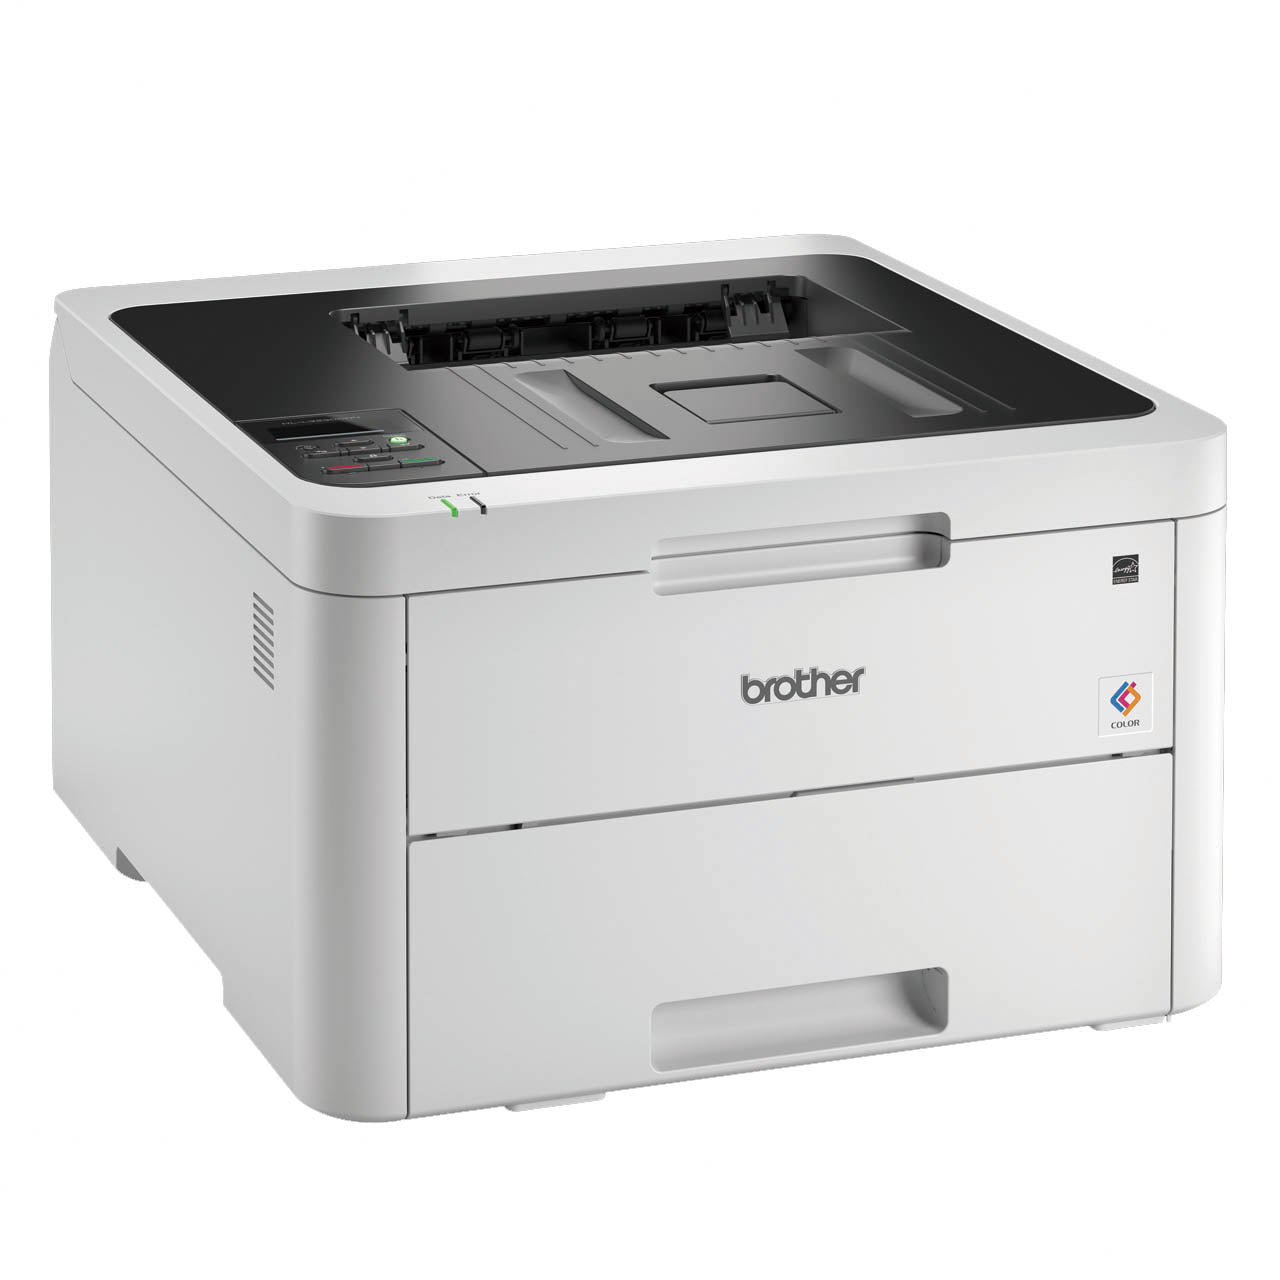 Brother HL-L3230CDN Colour LED Printer (HL-L3230CDN)